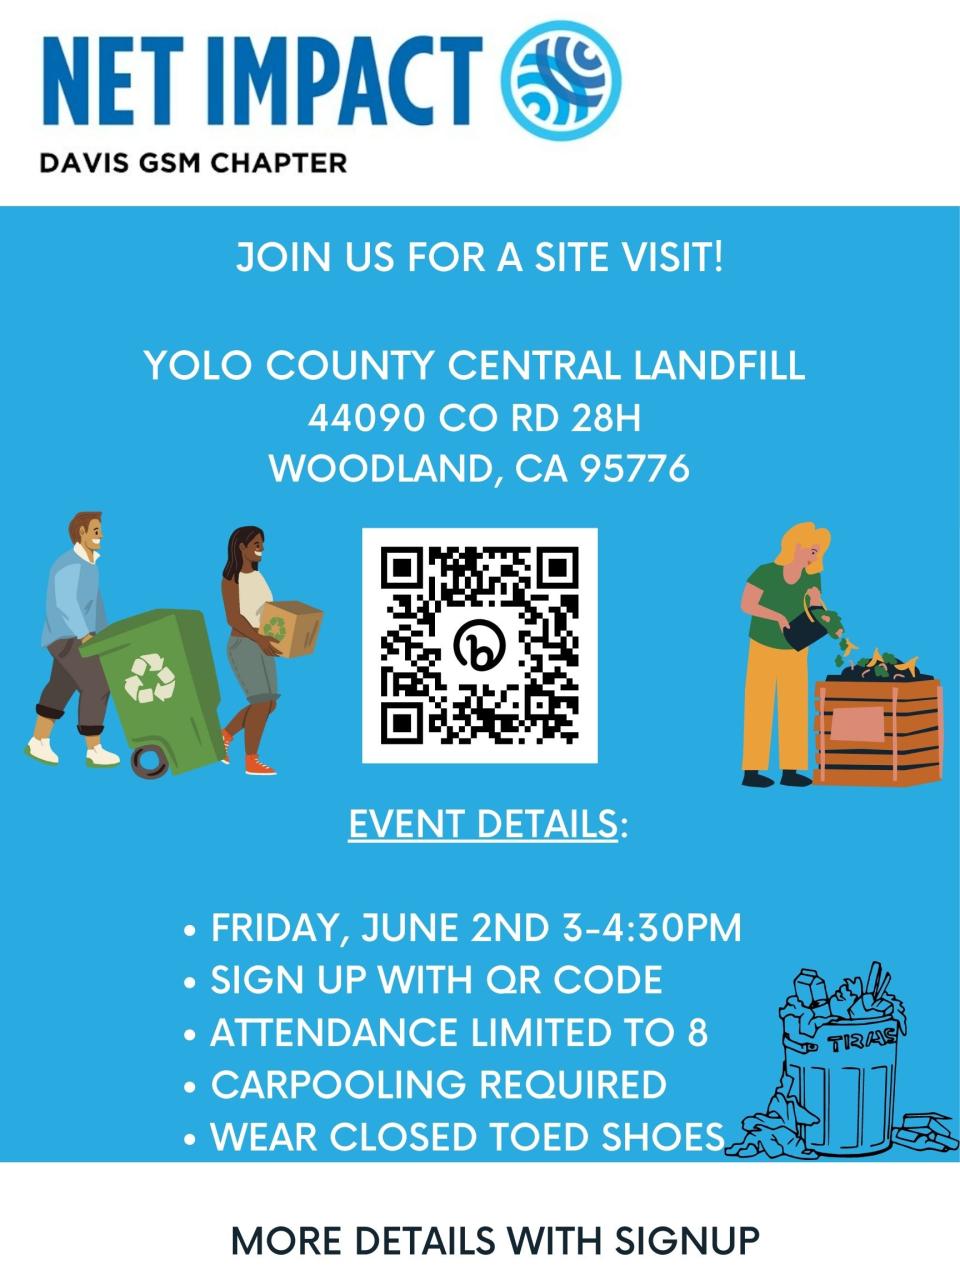 Yolo County Central Landfill Site Visit UC Davis Graduate School of